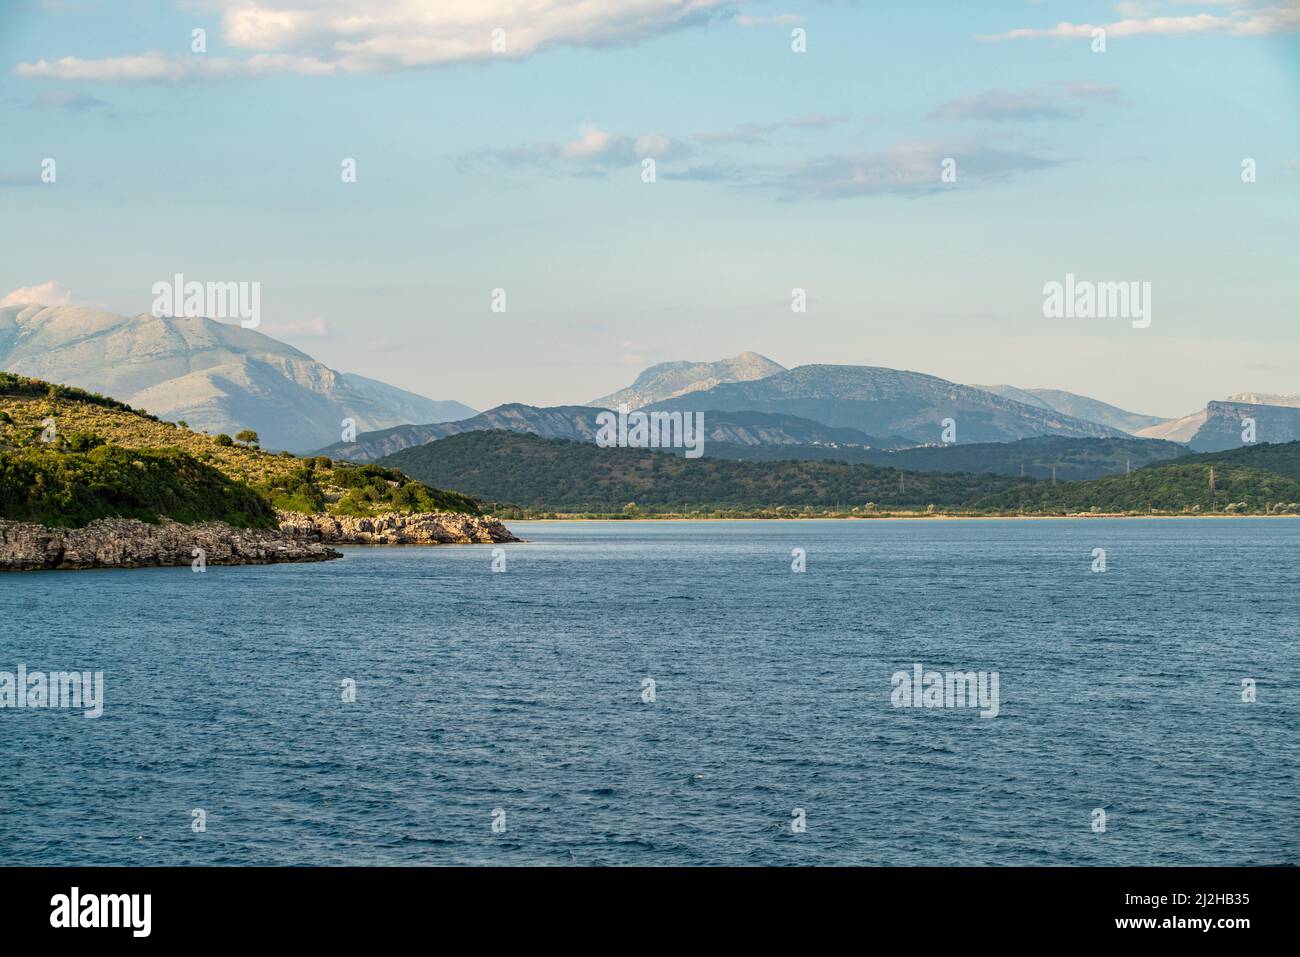 Grecia, Igoumenitsa, Mar rodeado de colinas Foto de stock